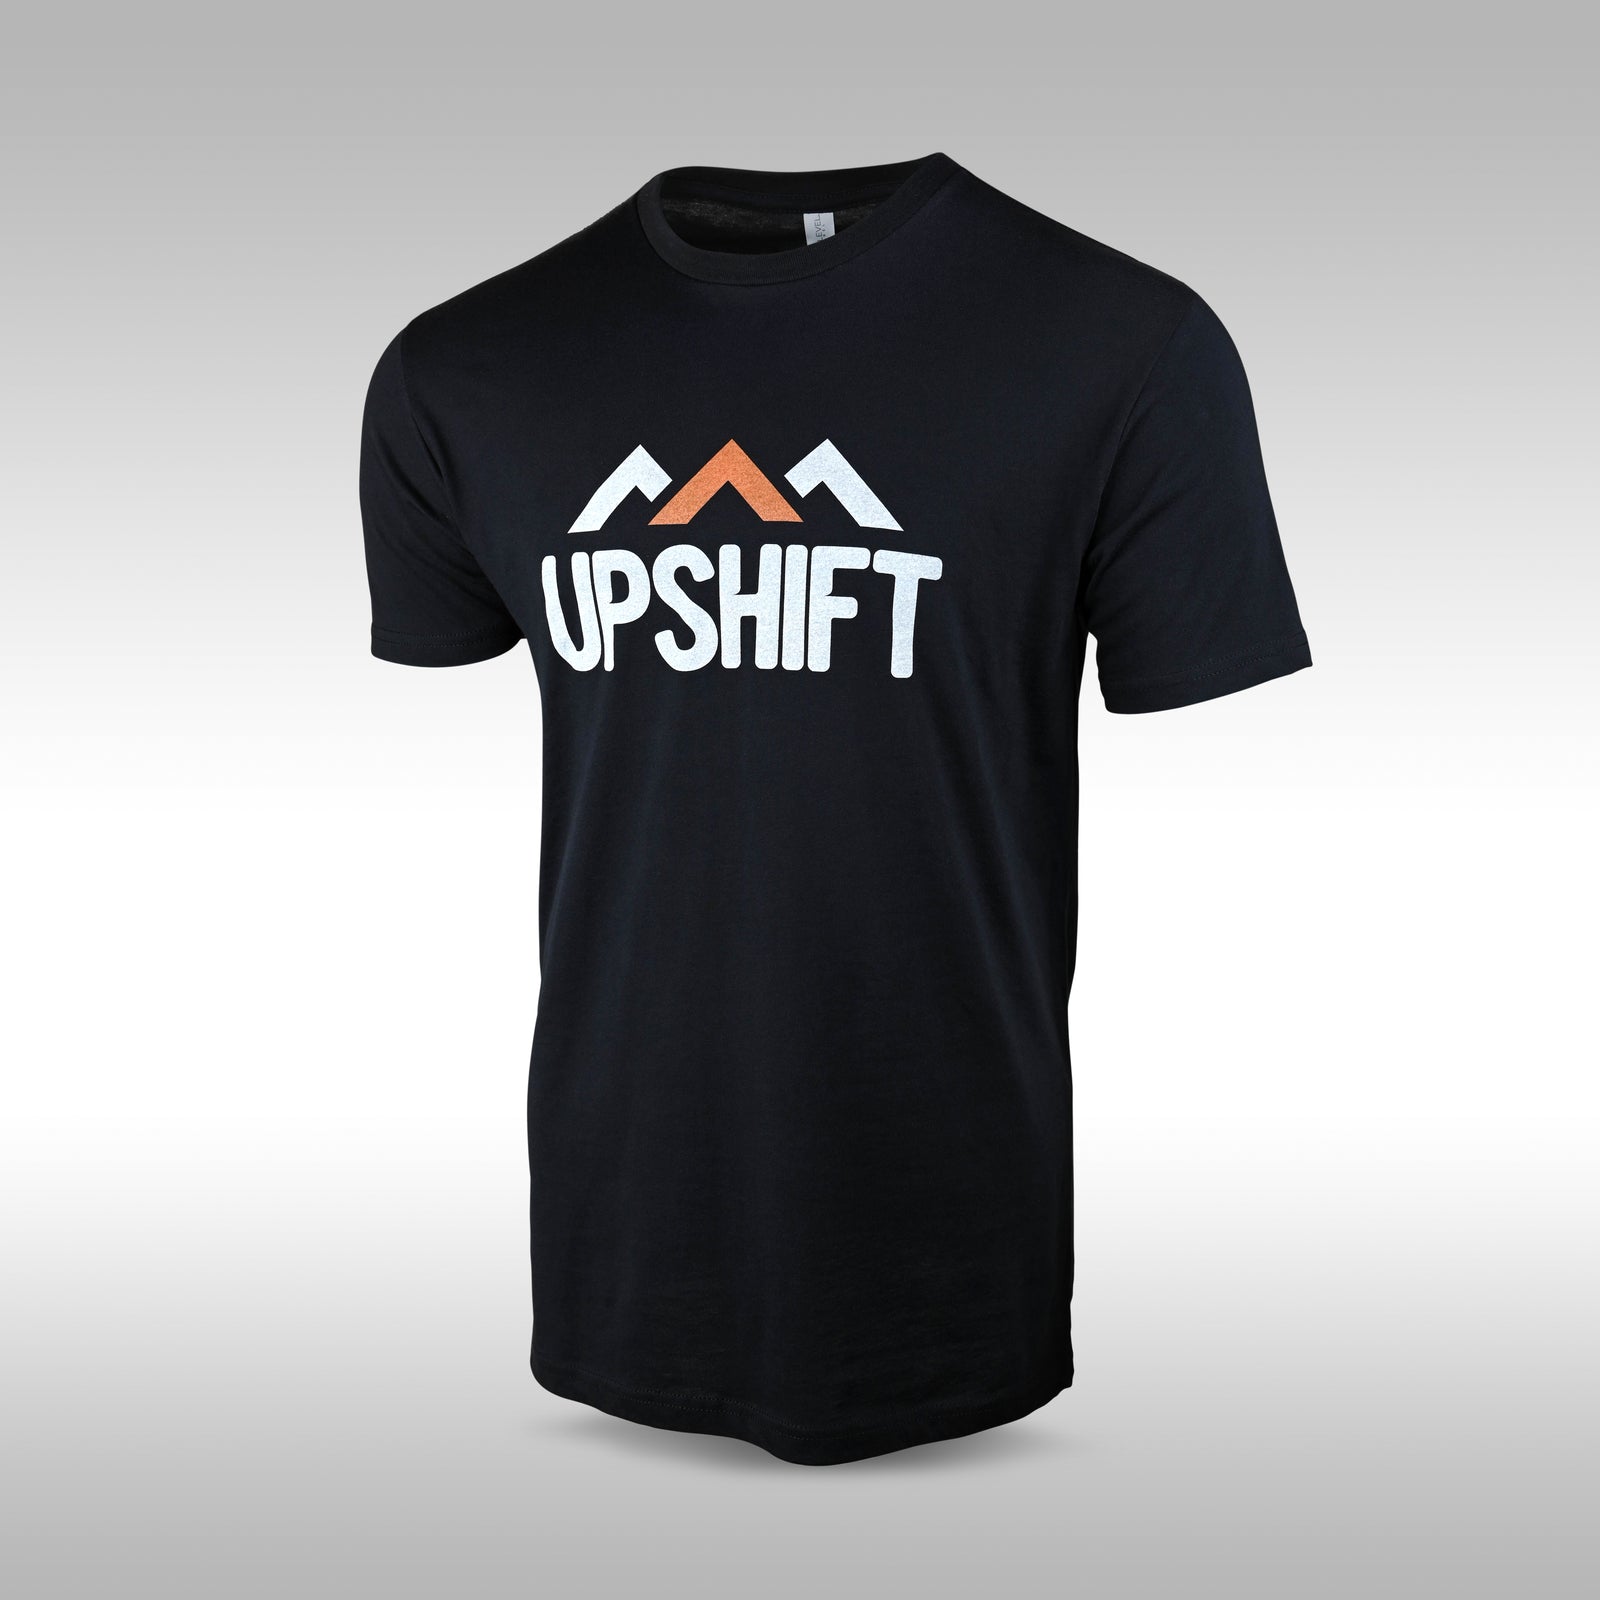 UPSHIFT UTILITY STRAPS - Upshift Online Inc.